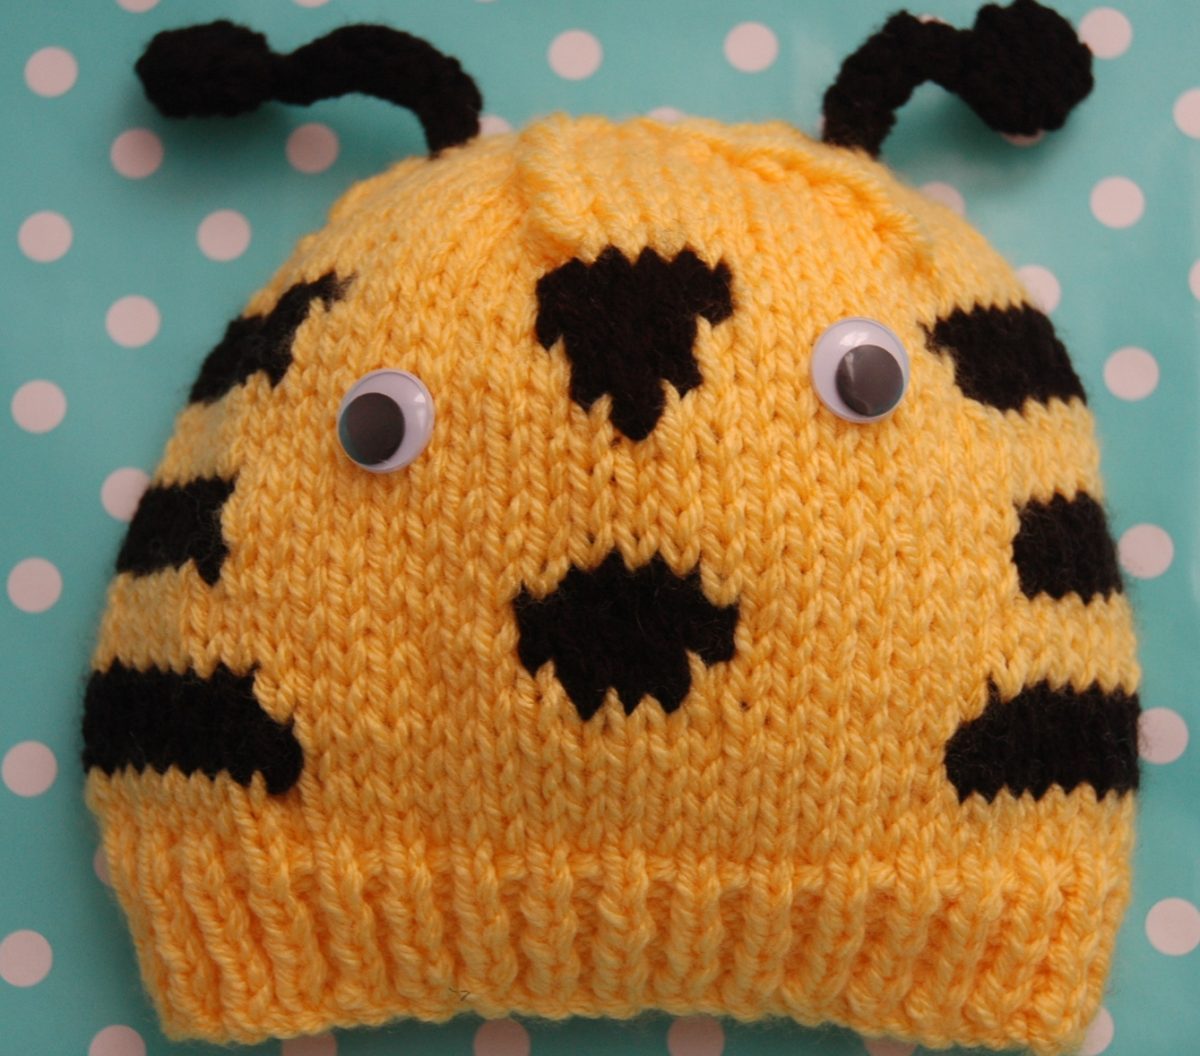 Bee hat knitting pattern